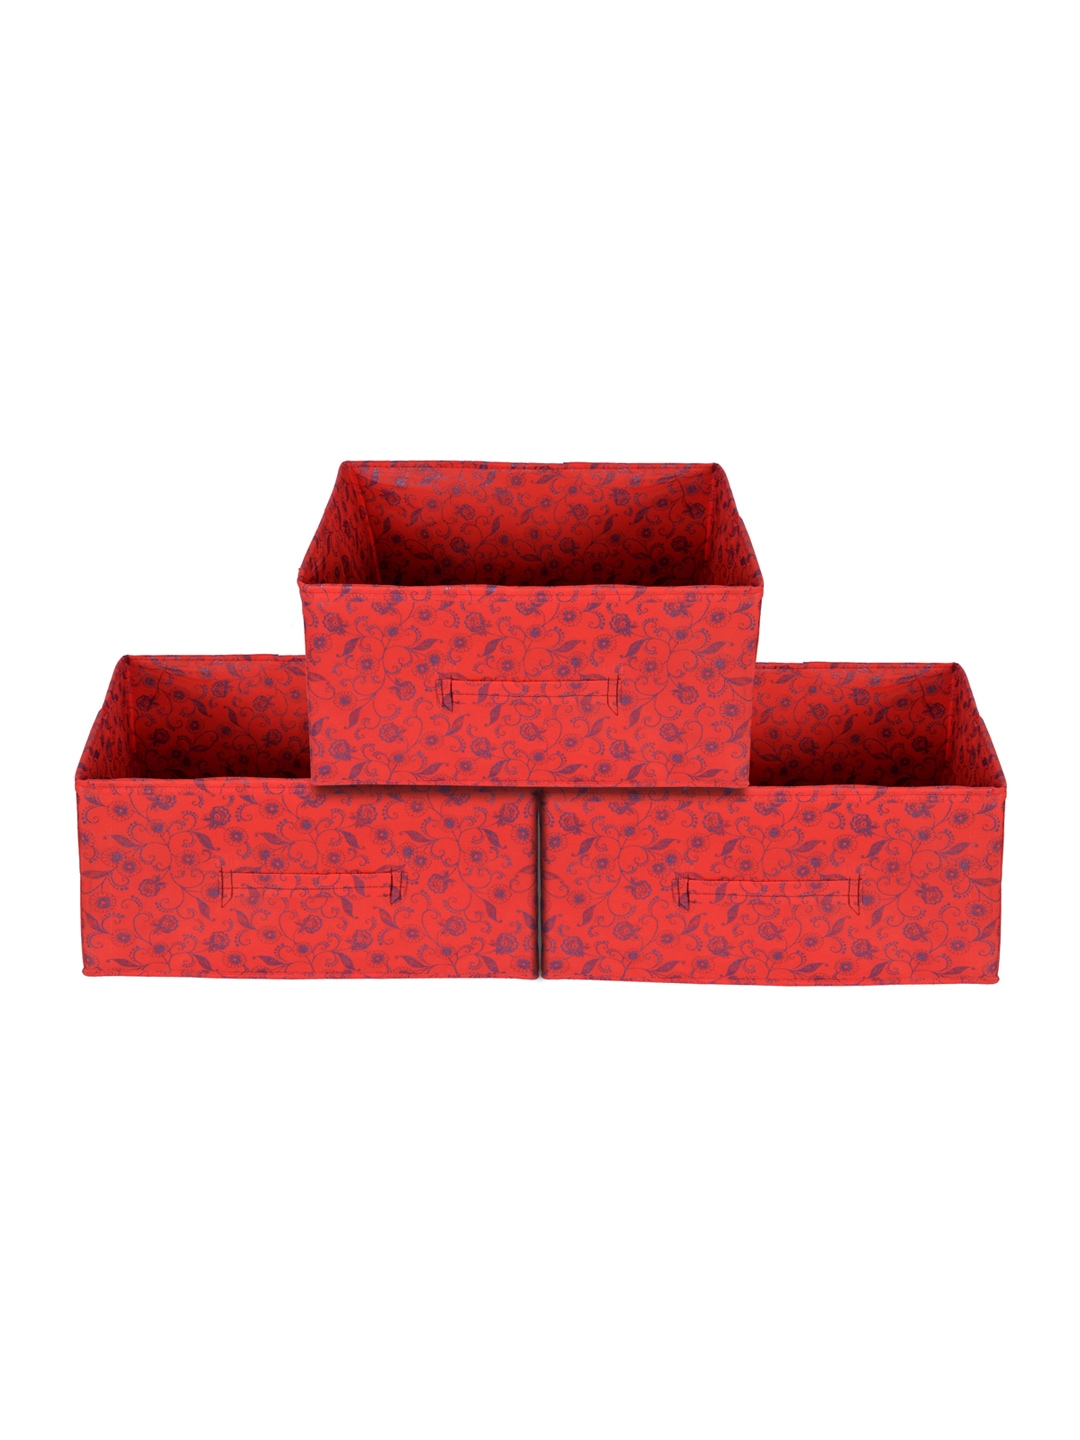 Kuber Industries Set Of 3 Red Metallic Floral Printed Drawer Storage Organizers Price in India